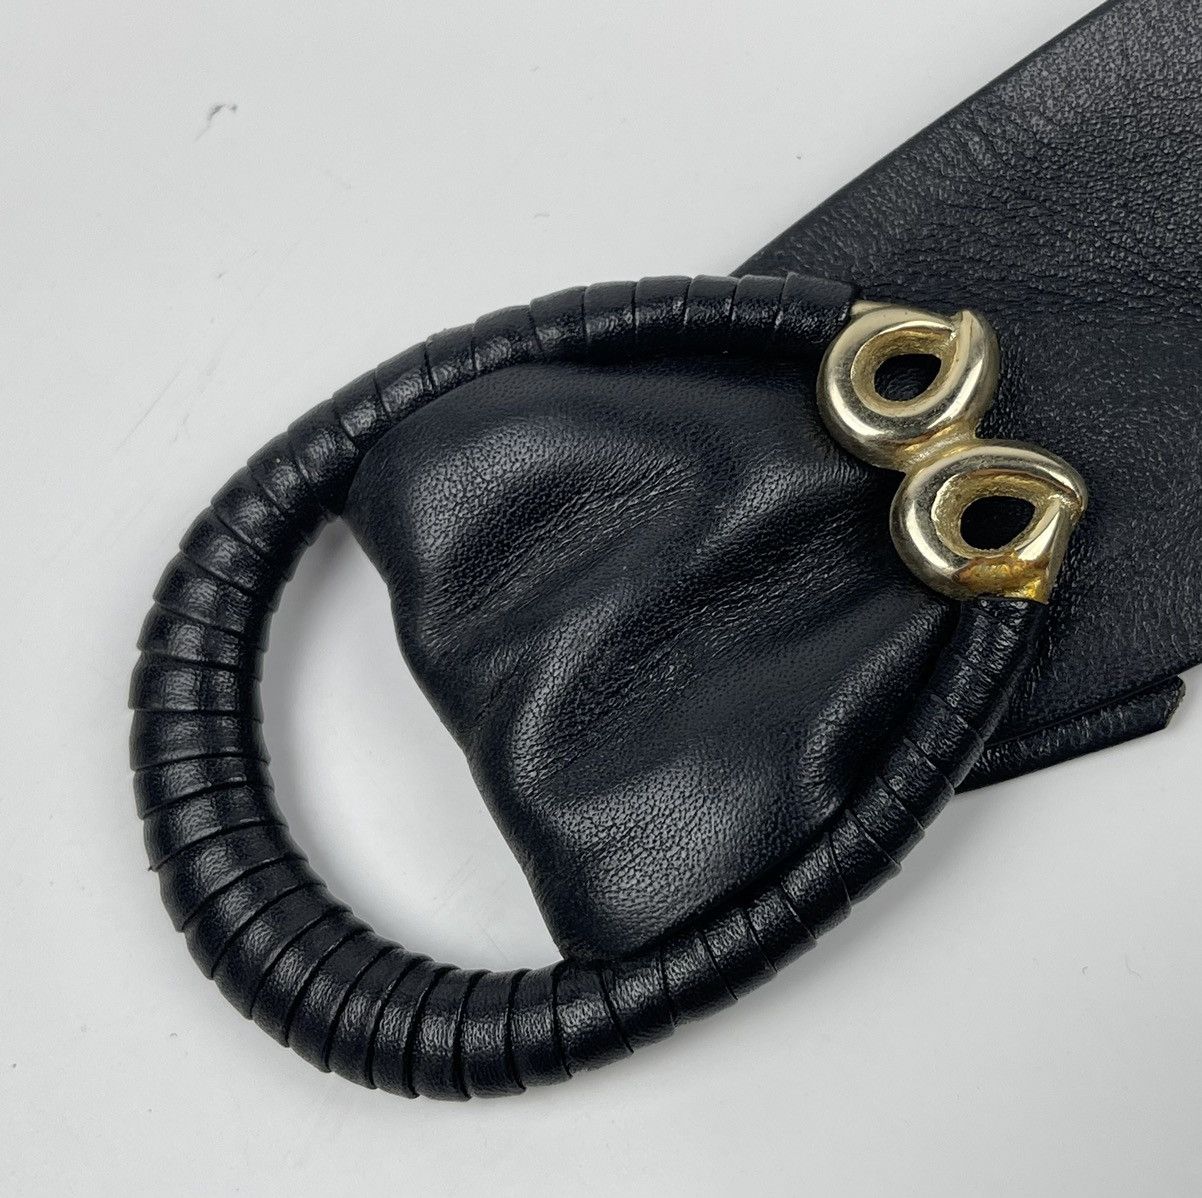 Genuine Leather - yuki torii leather belt tc18 - 3